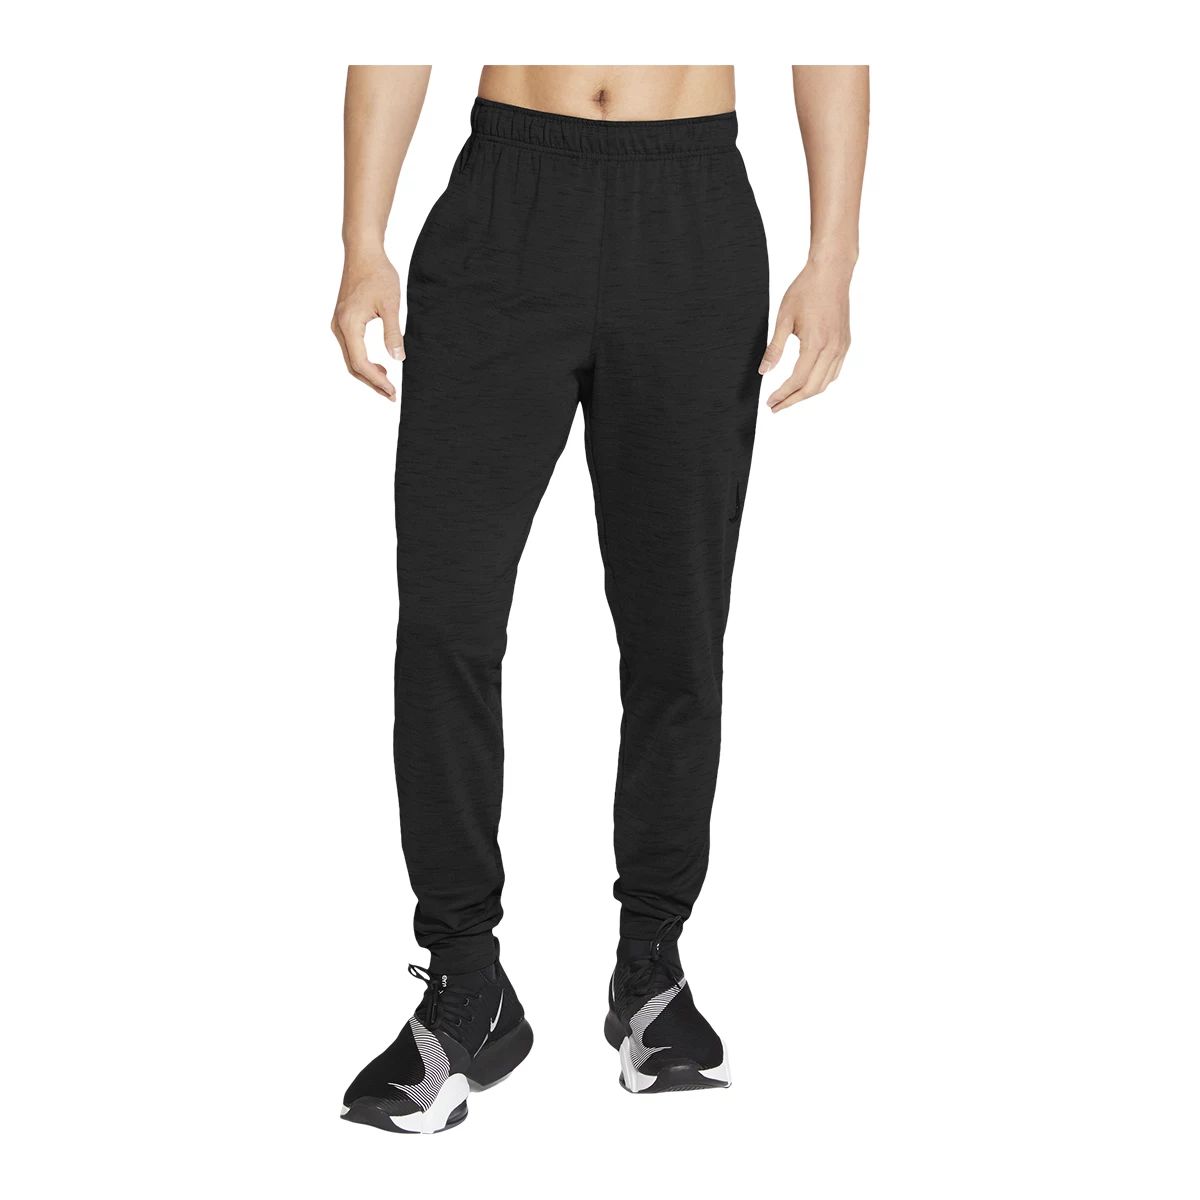 Buy Nike Pro Combat Tights Online IndiaNike Men Running Clothing